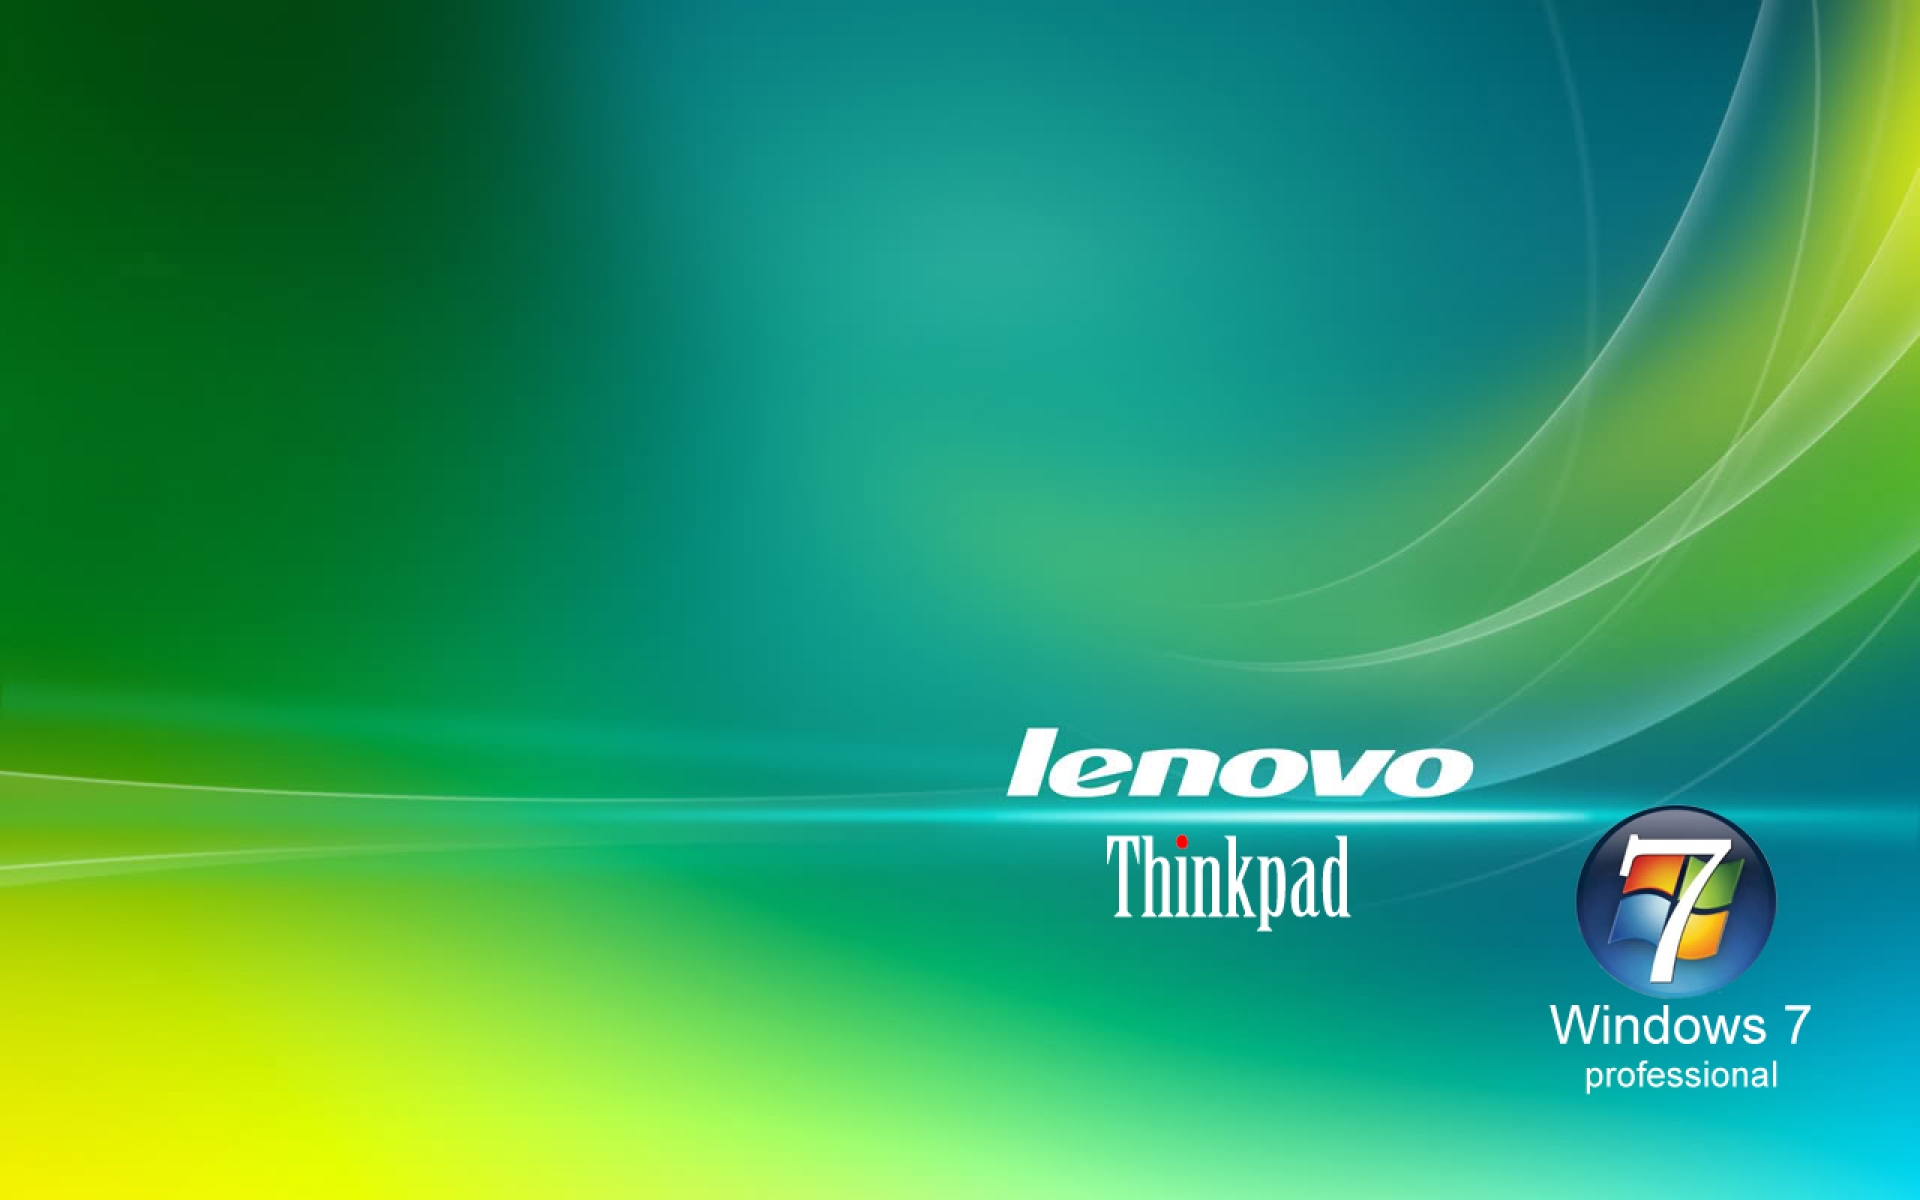 Ibm Lenovo Wallpaper Windows